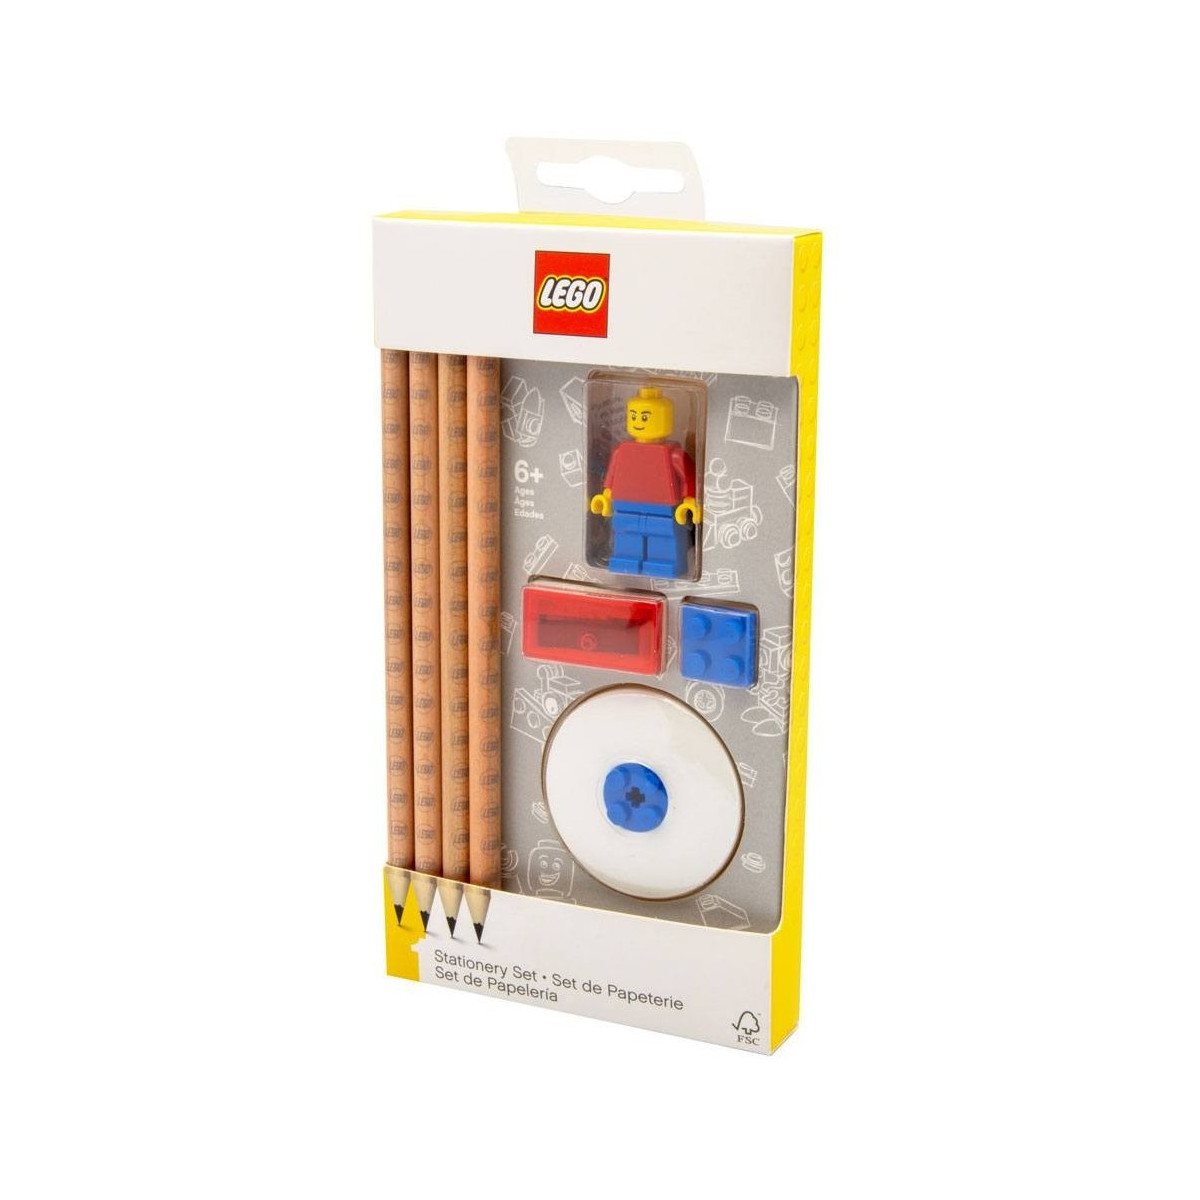 Lego 52053 - Stationery set